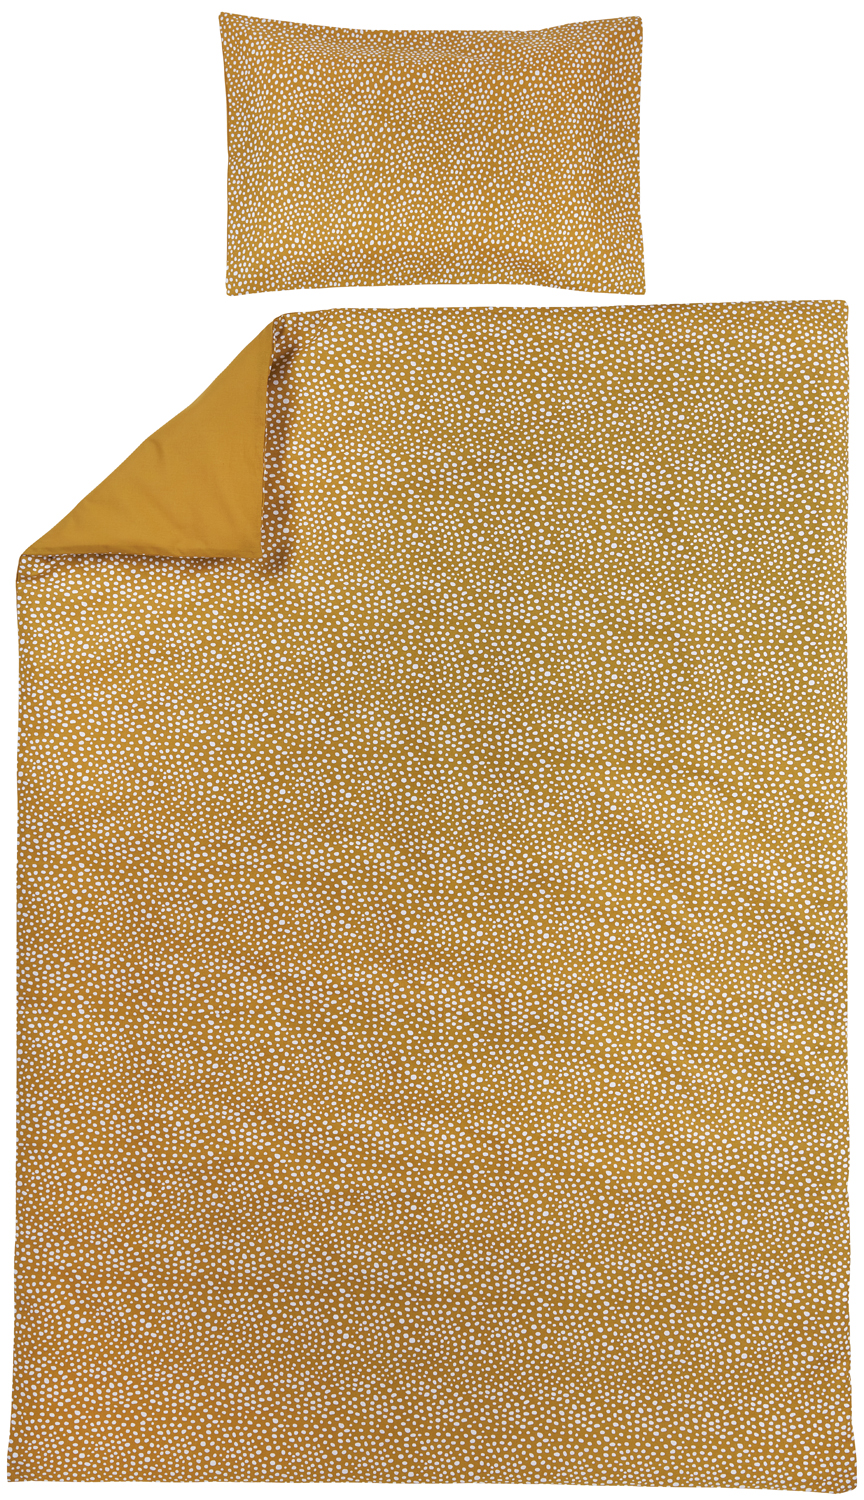 Duvet cover 1-Pers. Cheetah/Uni - honey gold - 140x200/220cm